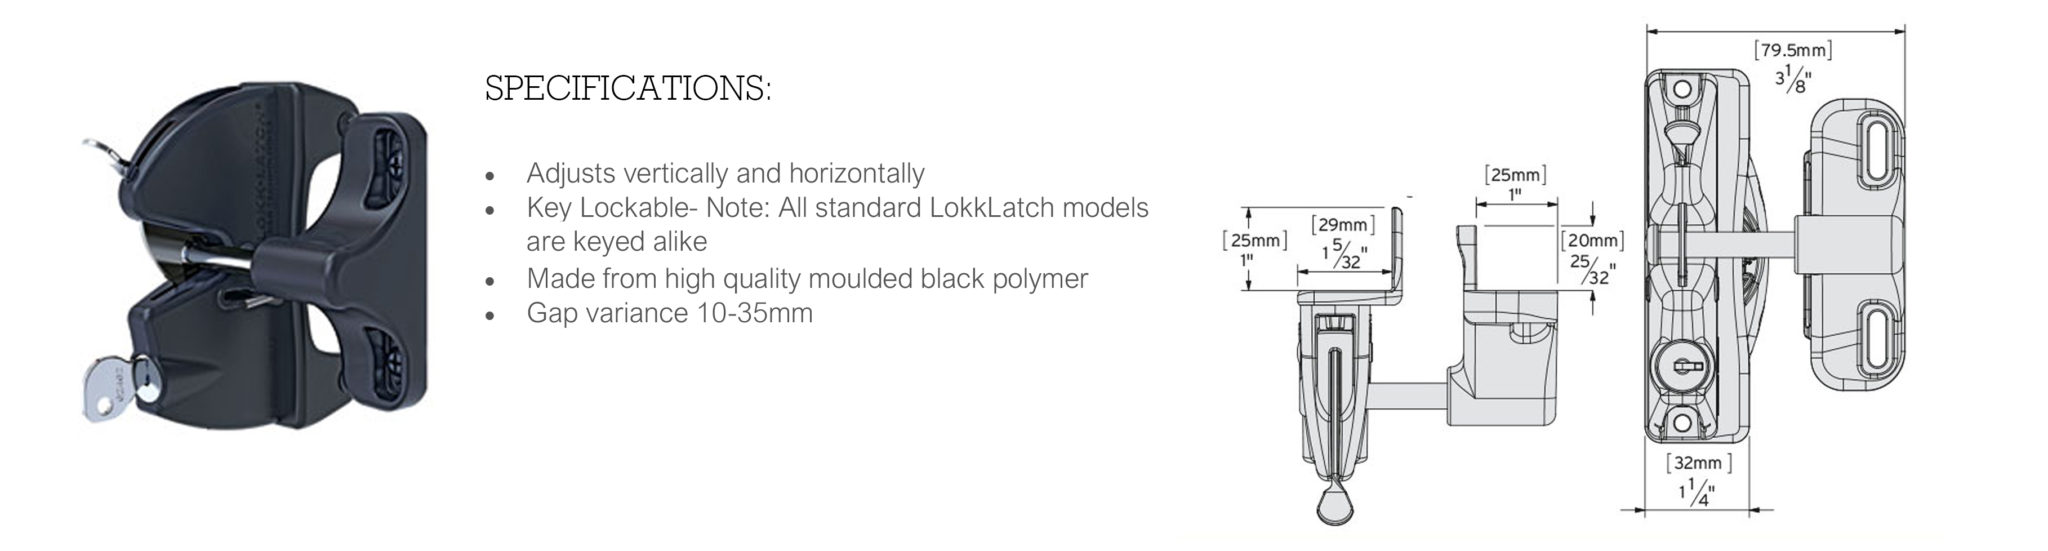 lokklatch-standard-with-specs